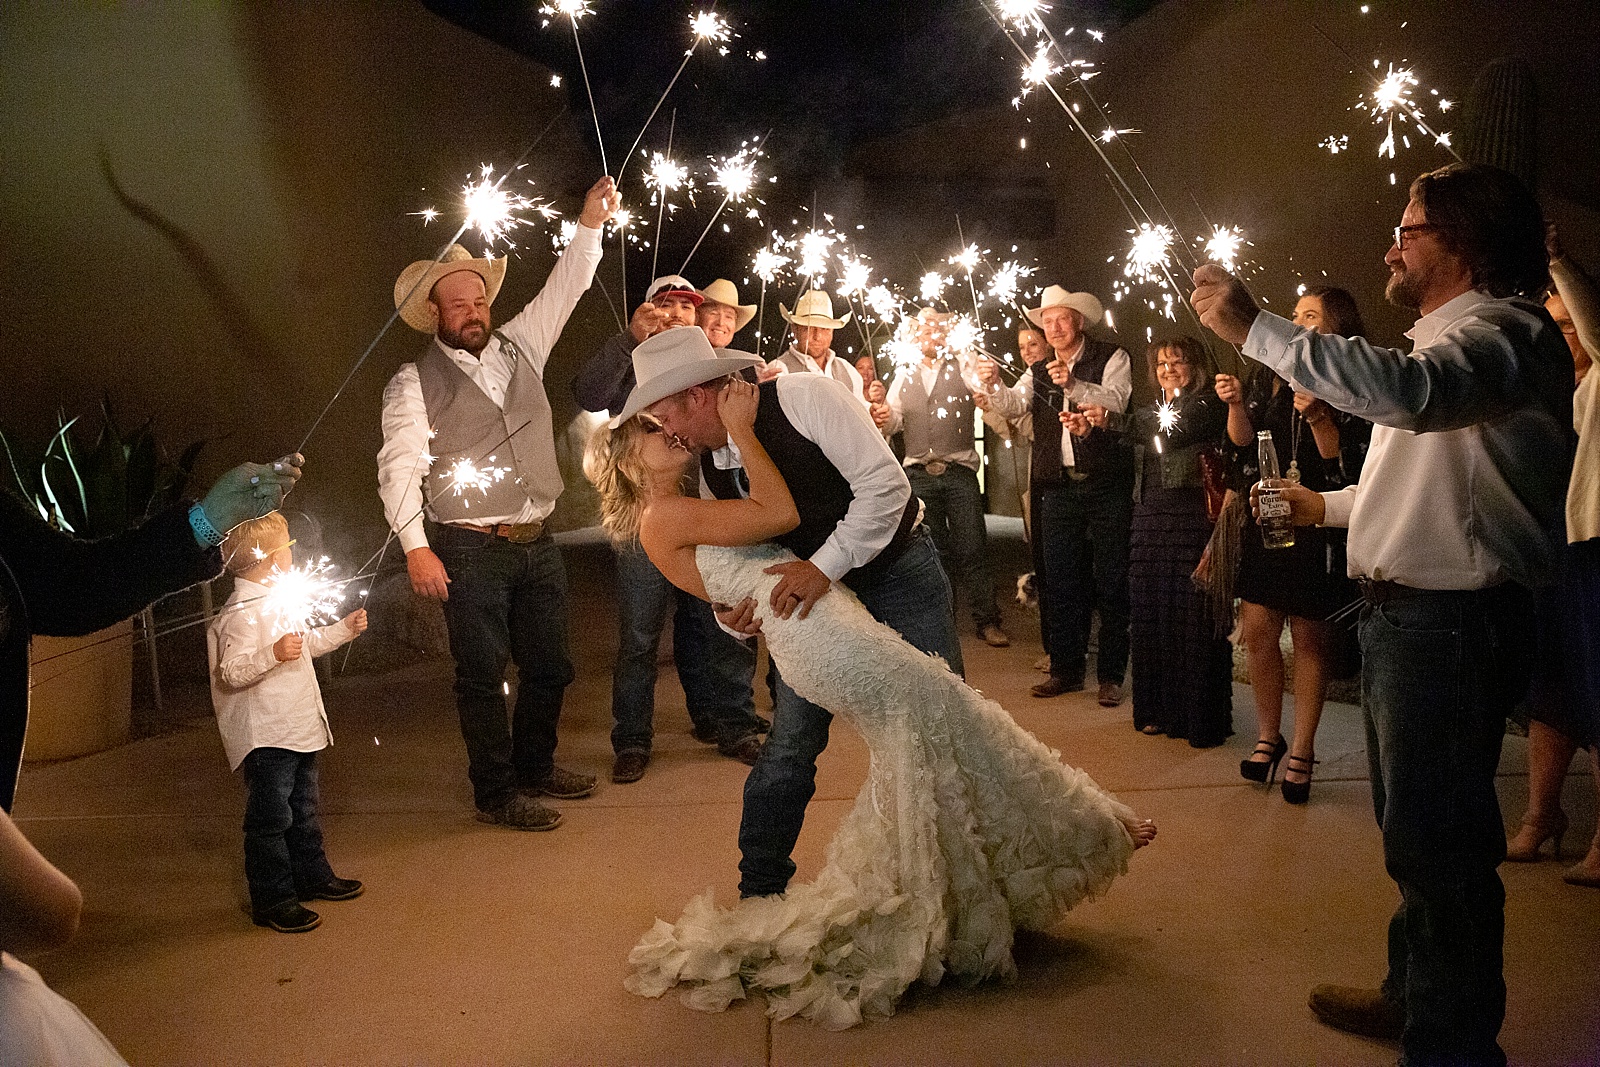 Arizona wedding photographer Randi Michelle Photography captures wedding day